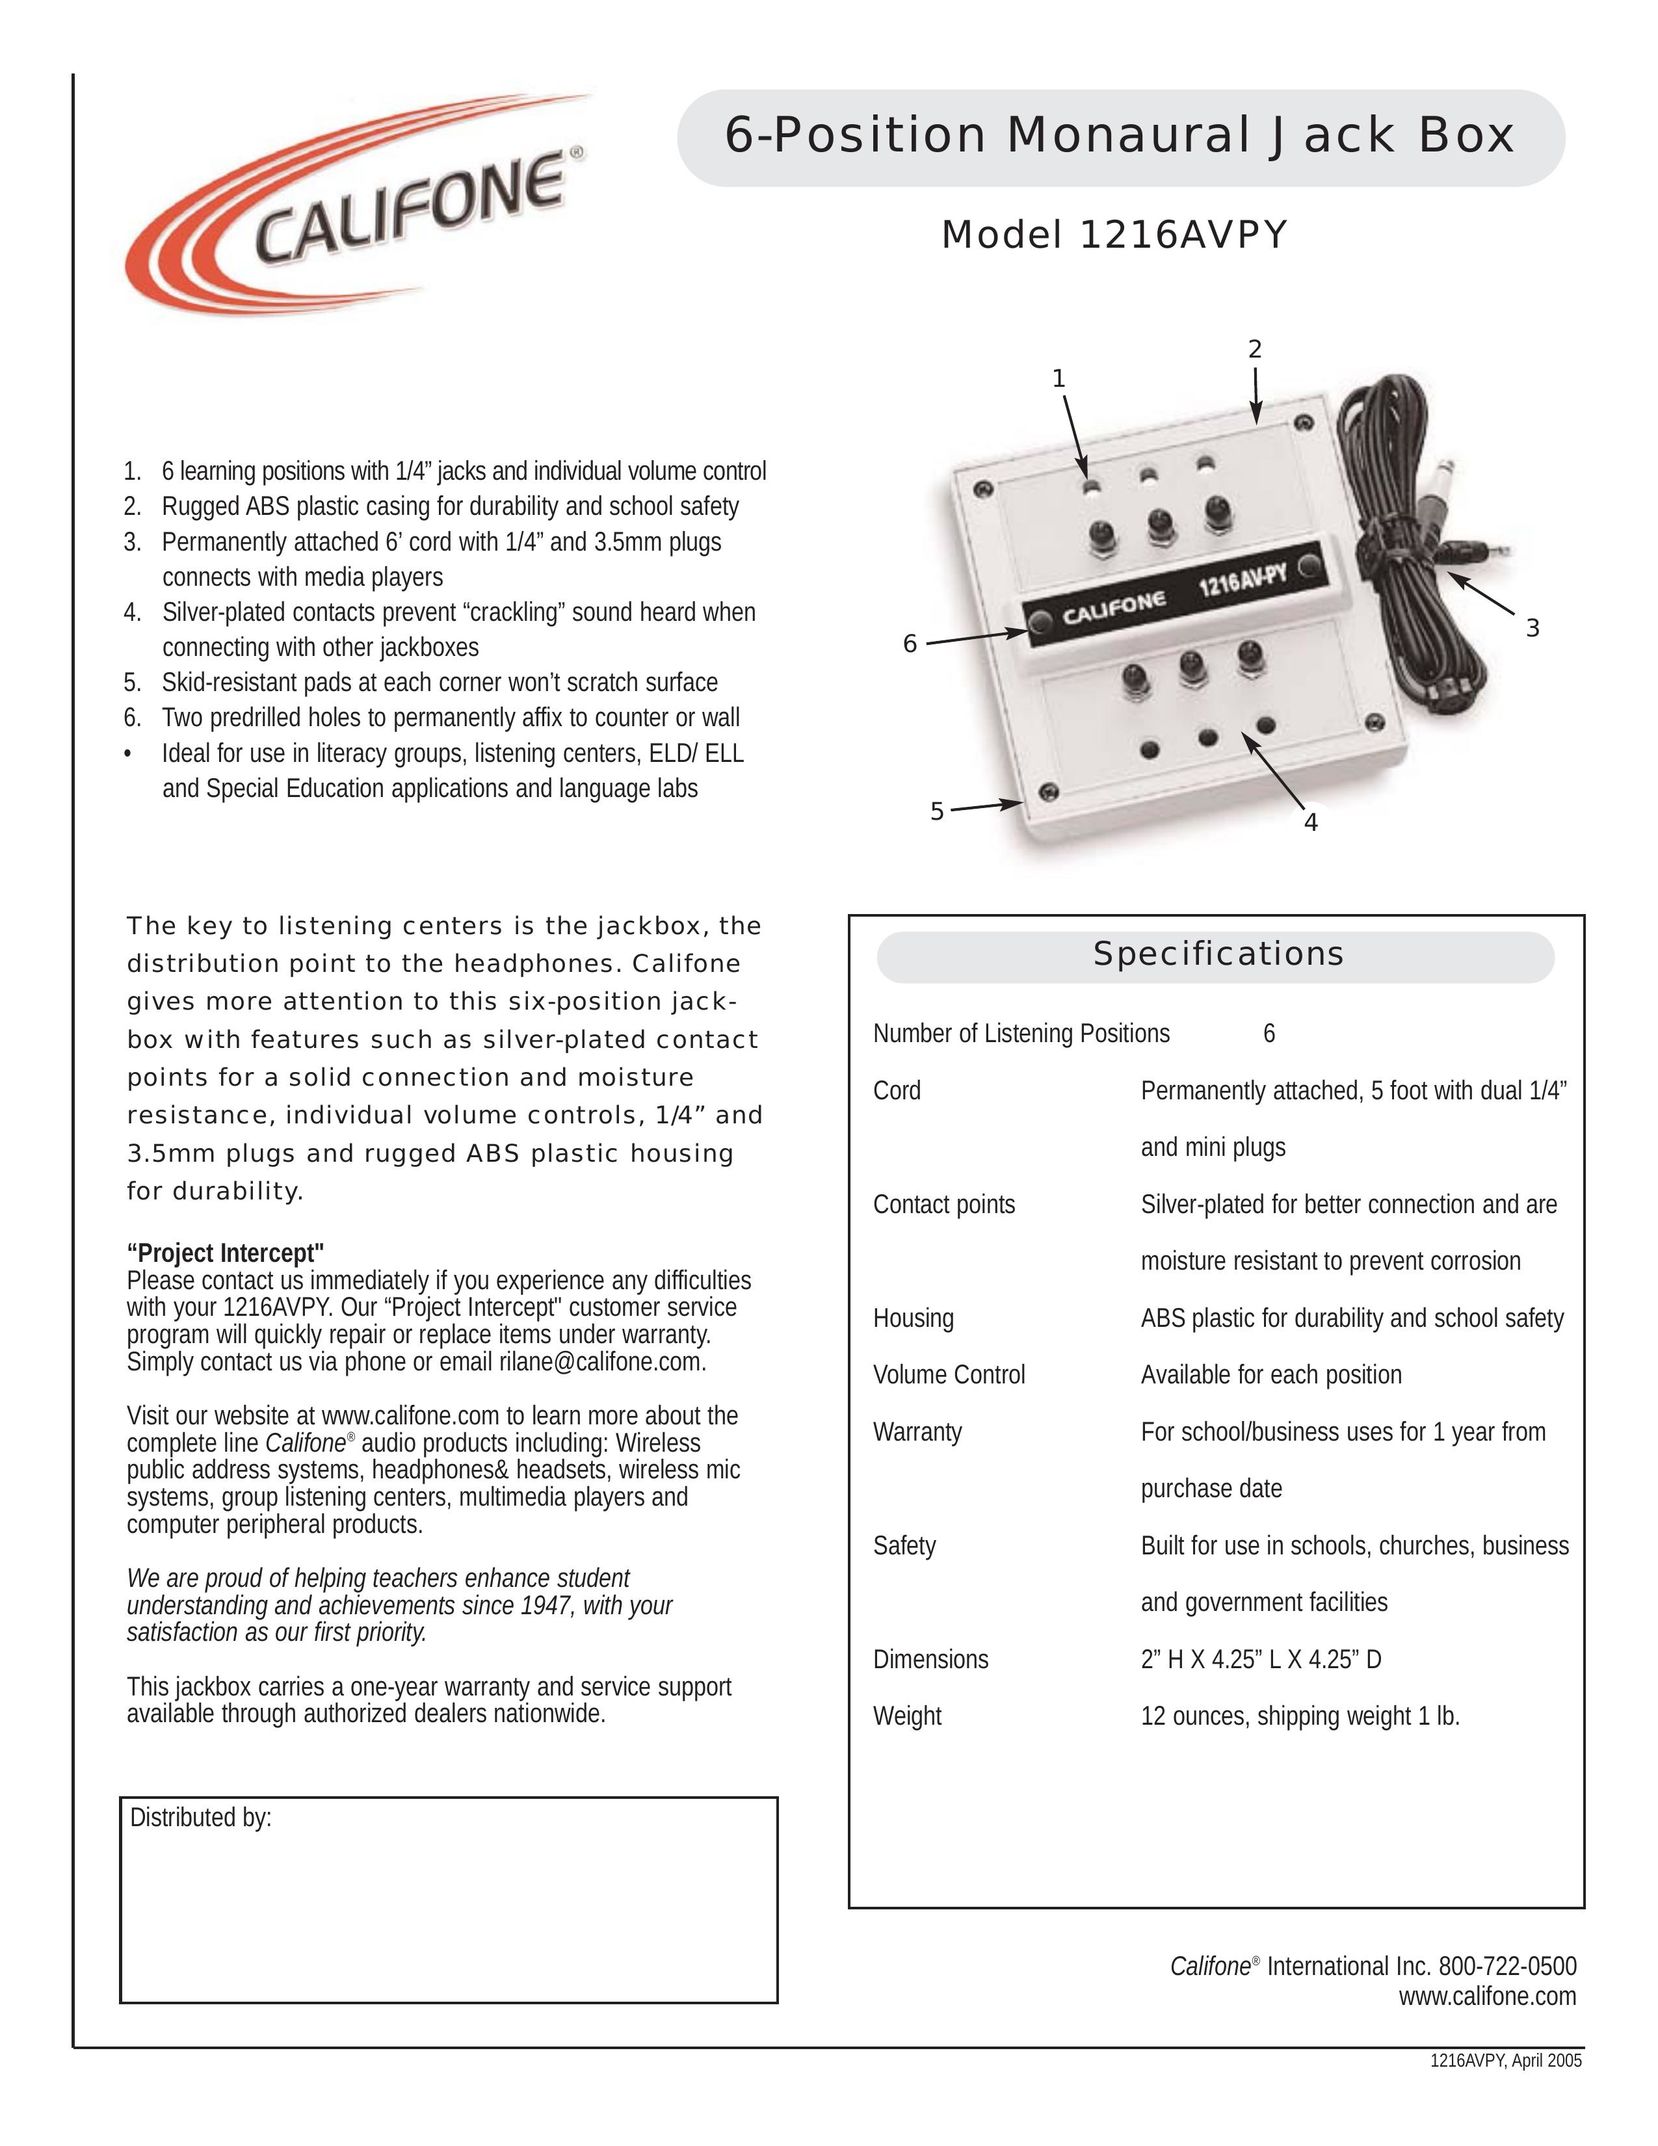 Califone 1216AVPY Stereo System User Manual